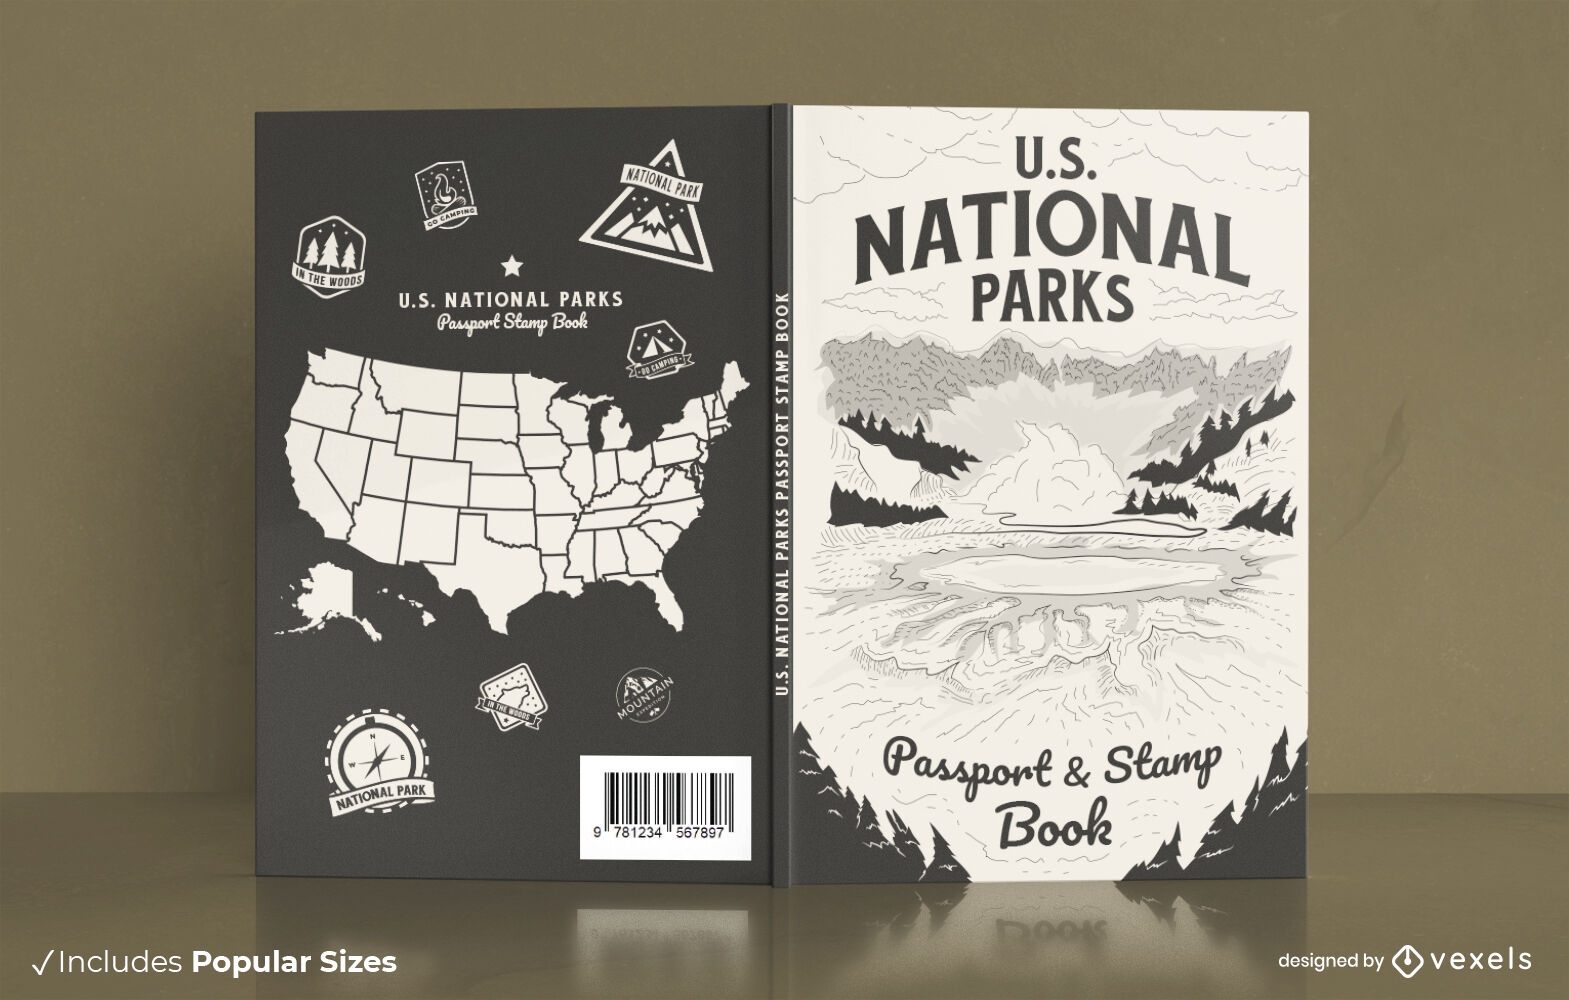 Dise?o de portada de libro de parques nacionales estadounidenses.